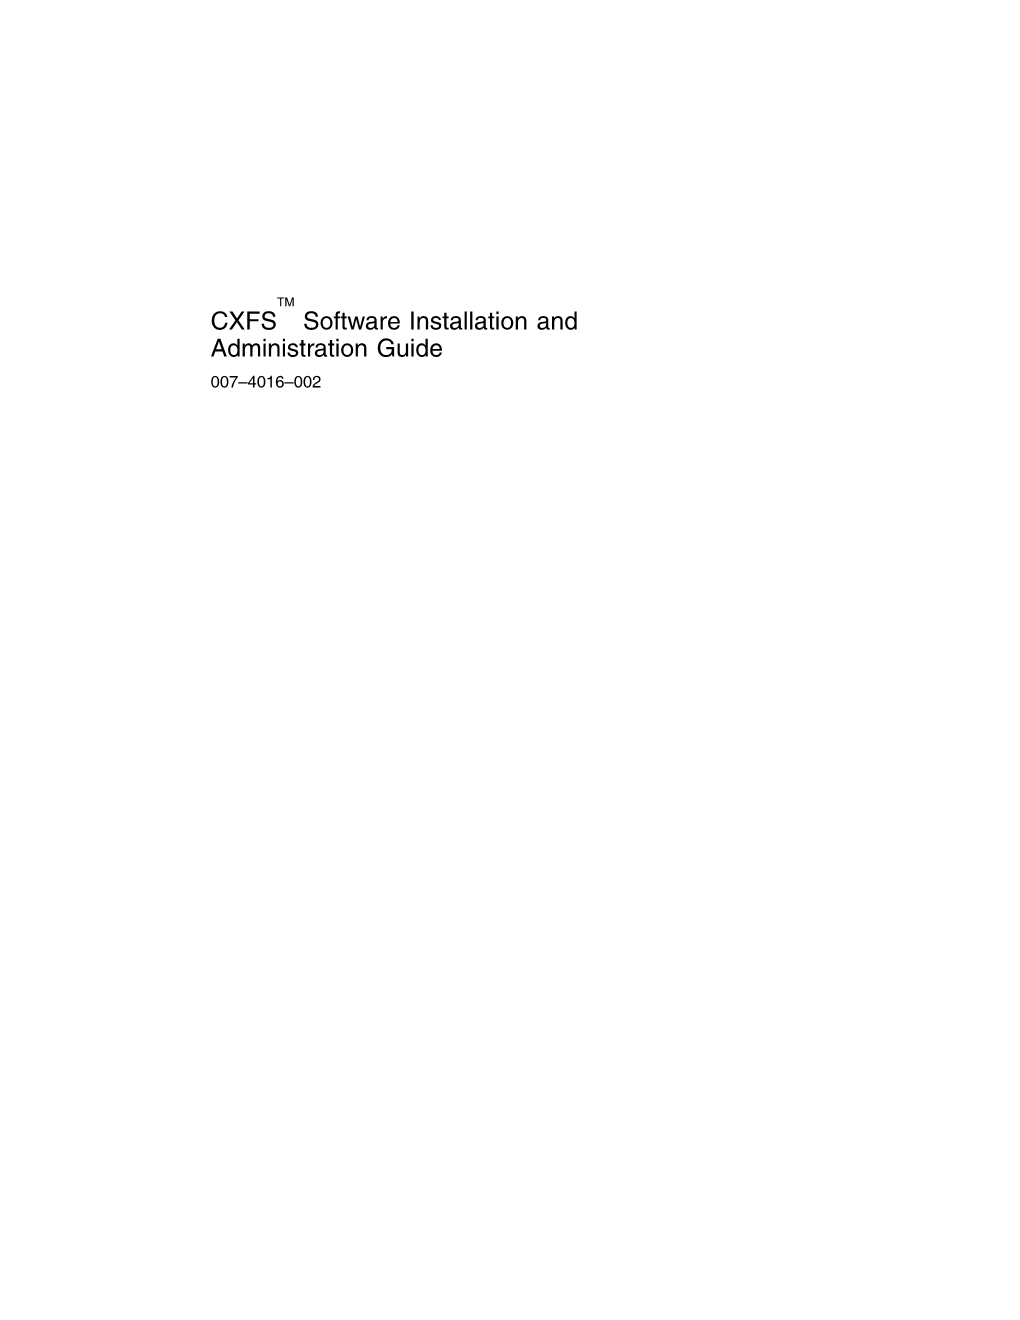 CXFS Software Installation and Administration Guide 007–4016–002 CONTRIBUTORS